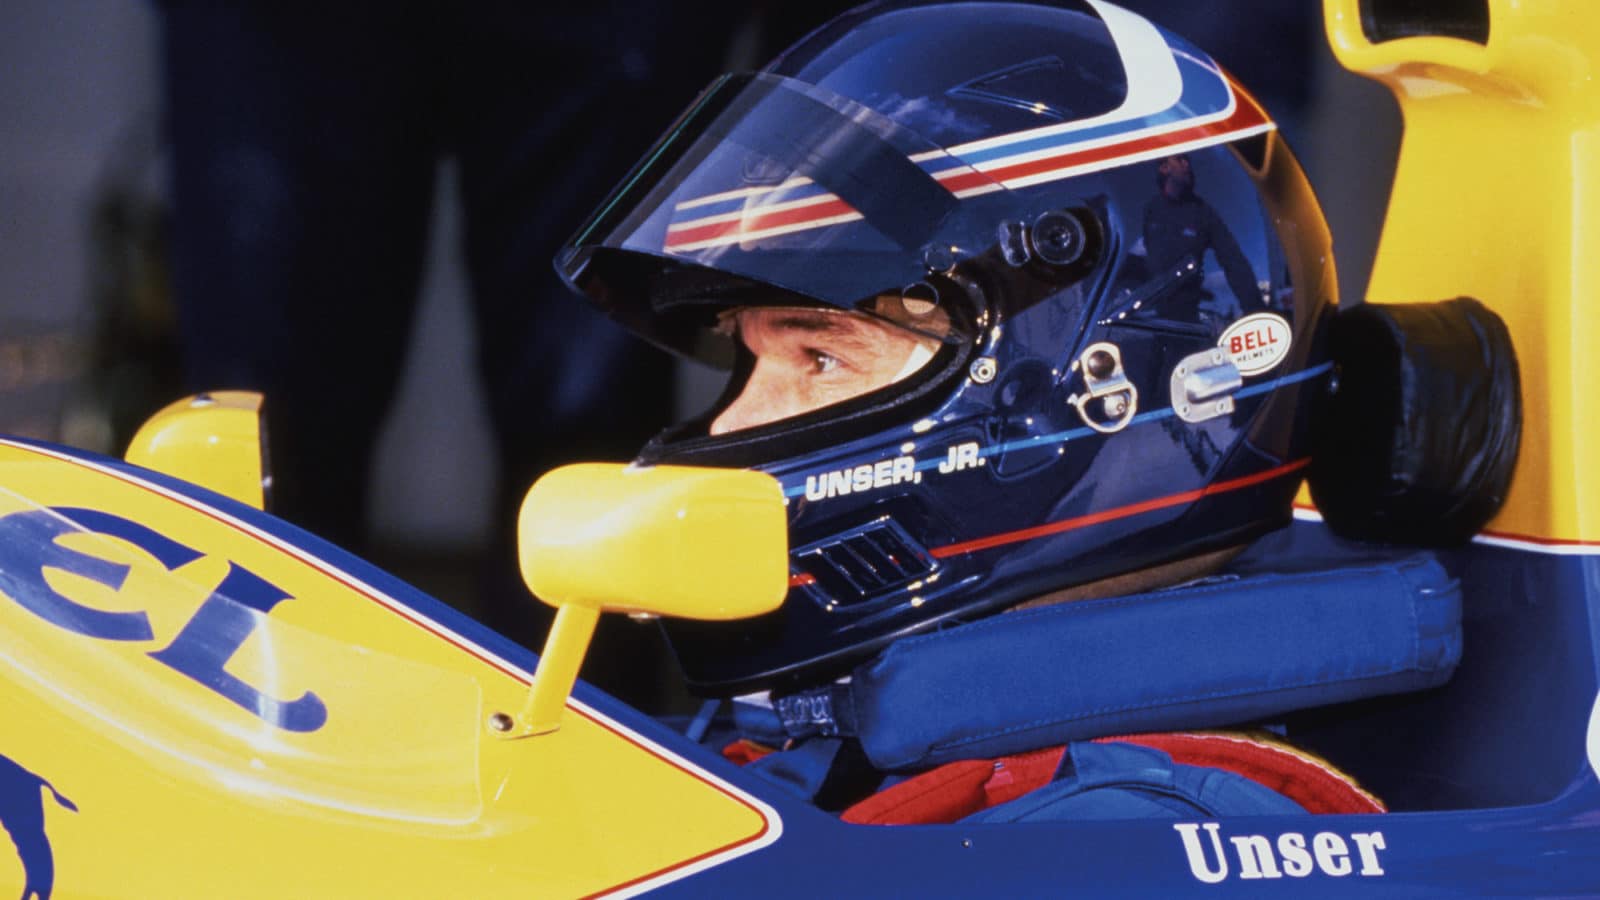 Al Unser Jr tests a Williams F1 car in 1992